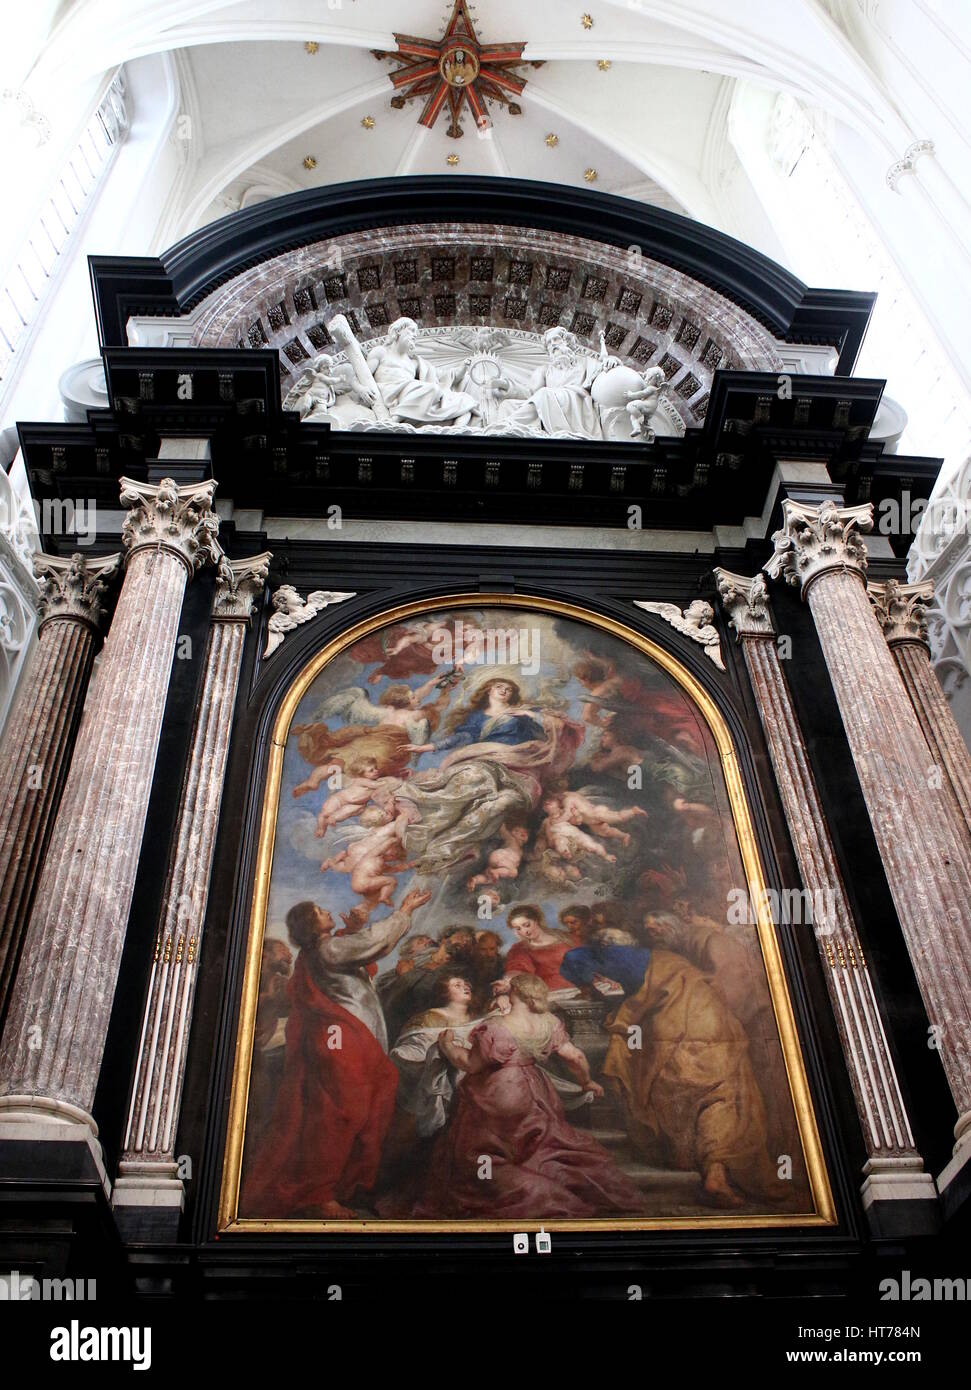 Peter Paul Rubens - Assunzione della Vergine Maria (De hemelvaart van Maria, 1626), la Cattedrale di Nostra Signora, Anversa, Belgio Foto Stock